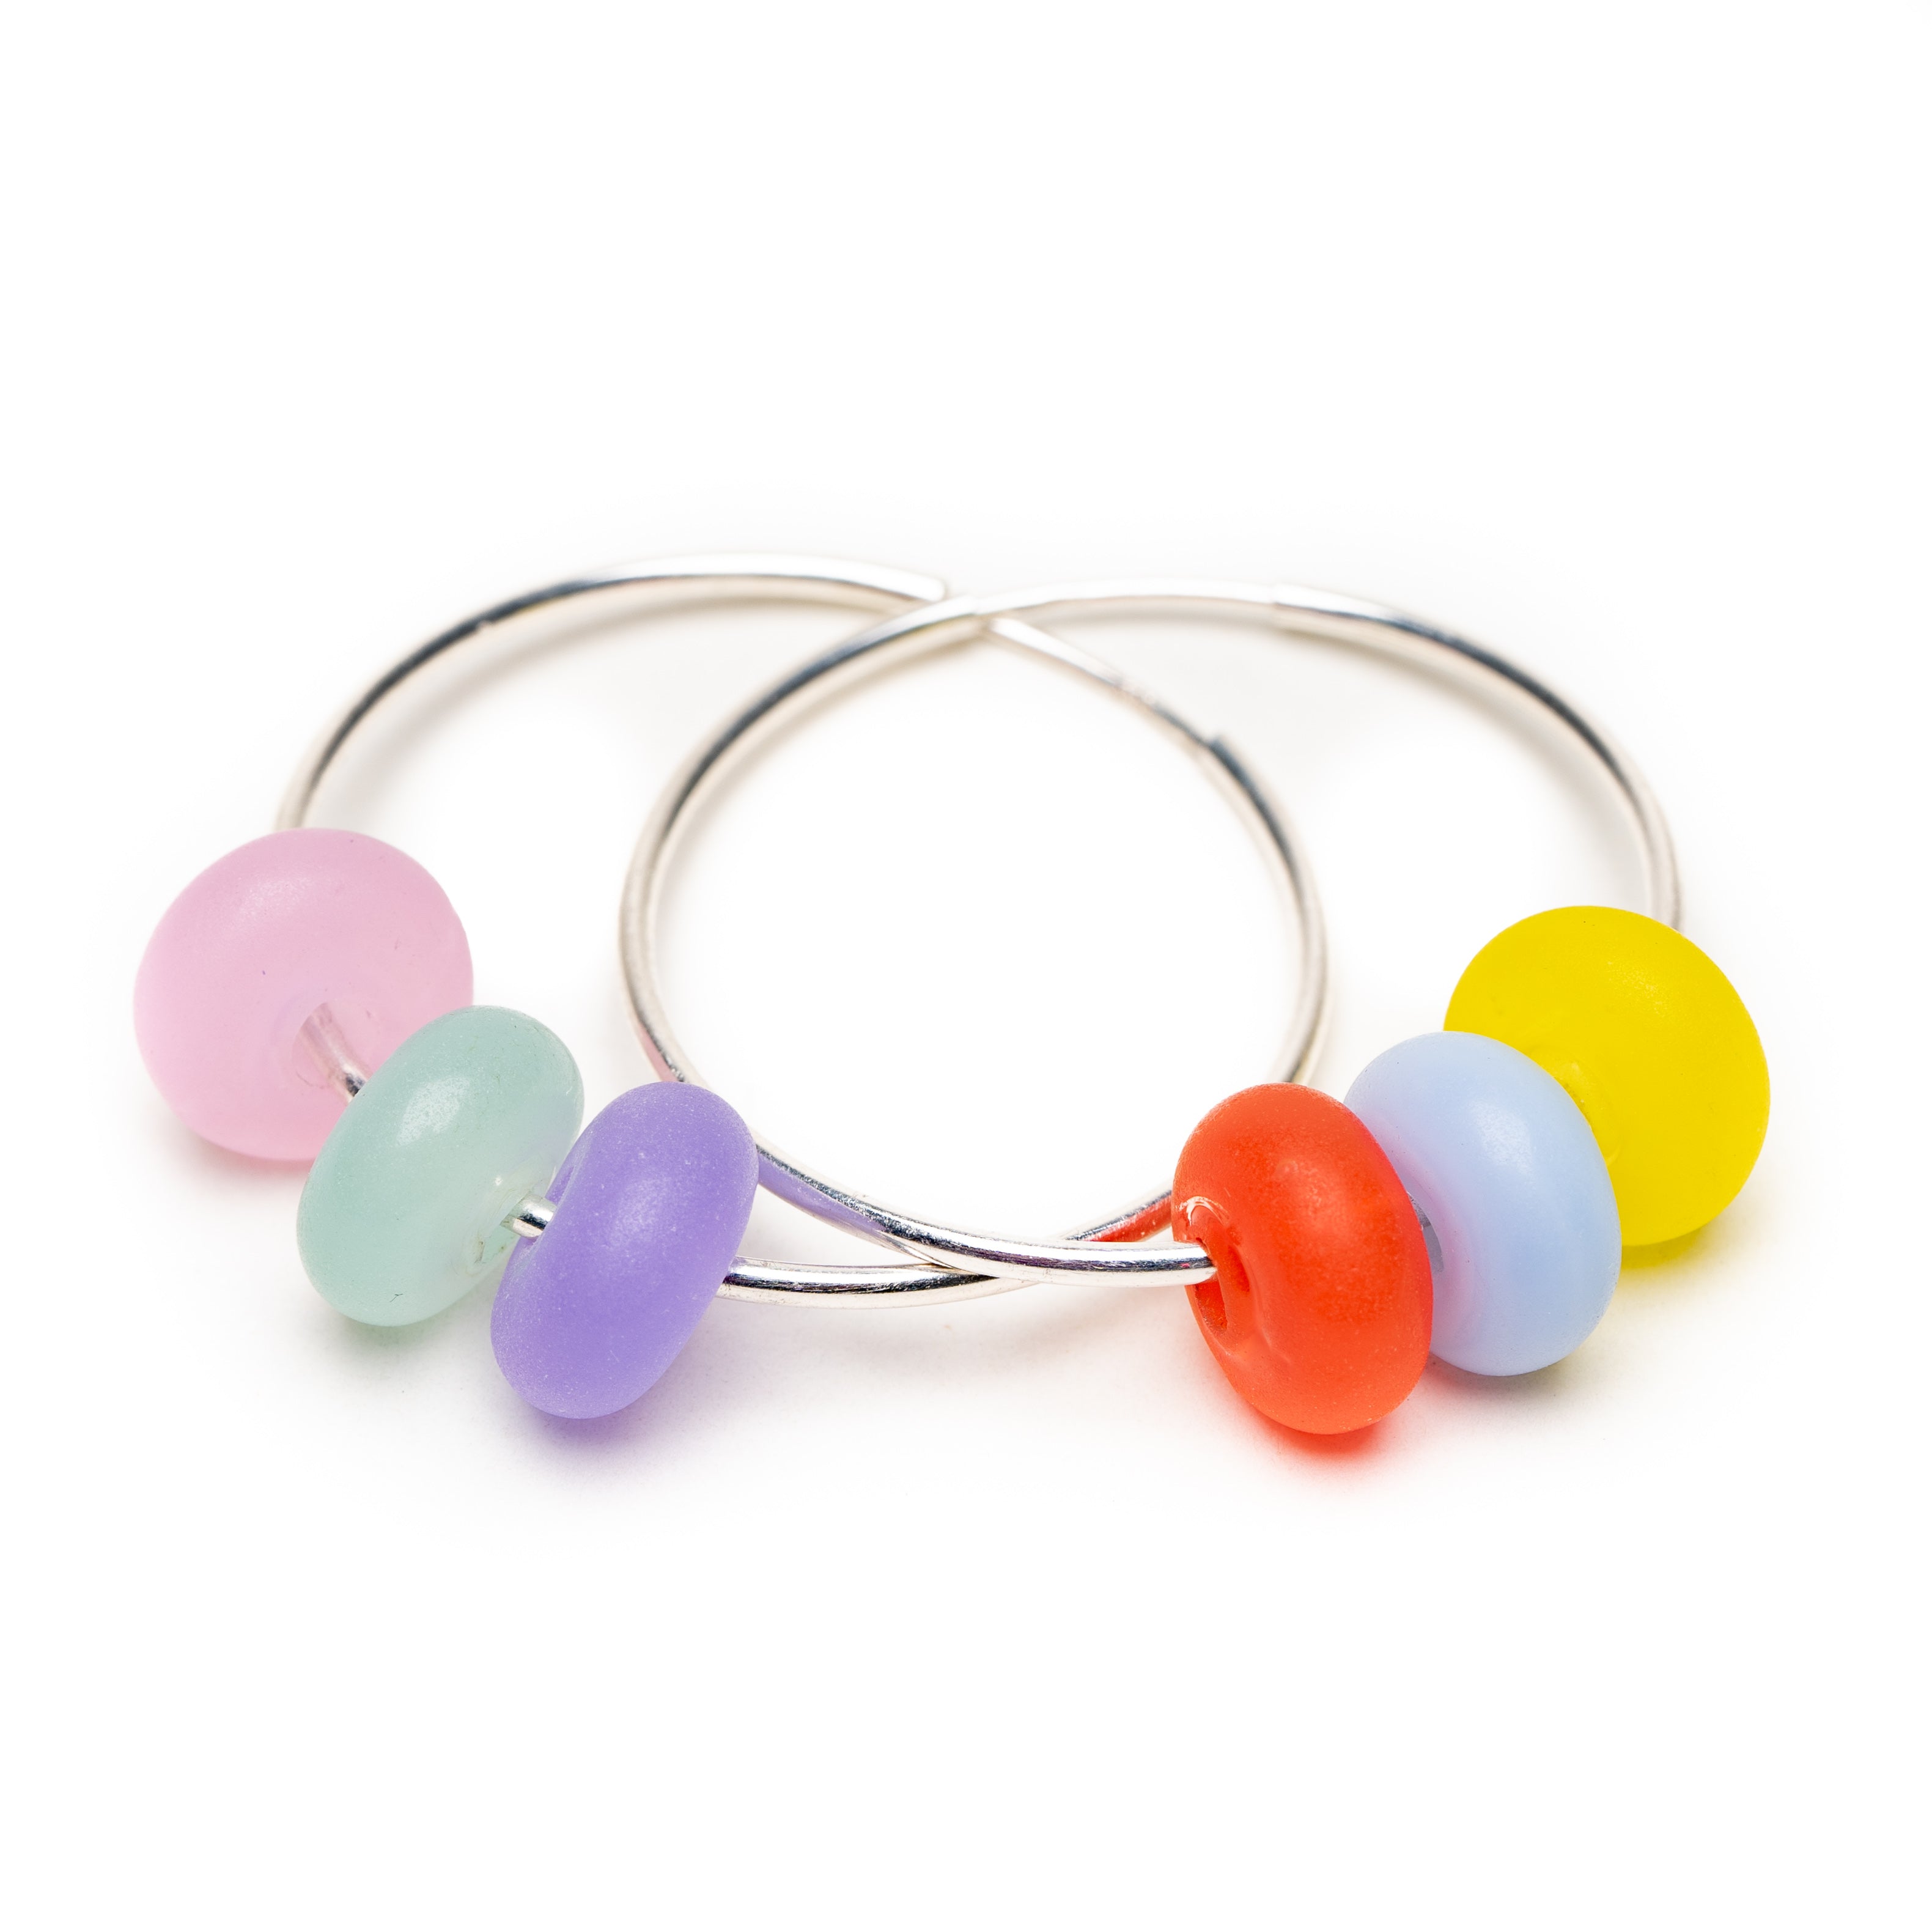 Teal, pink, purple, yellow, orange, blue small glass beads on silver hoop earrings.